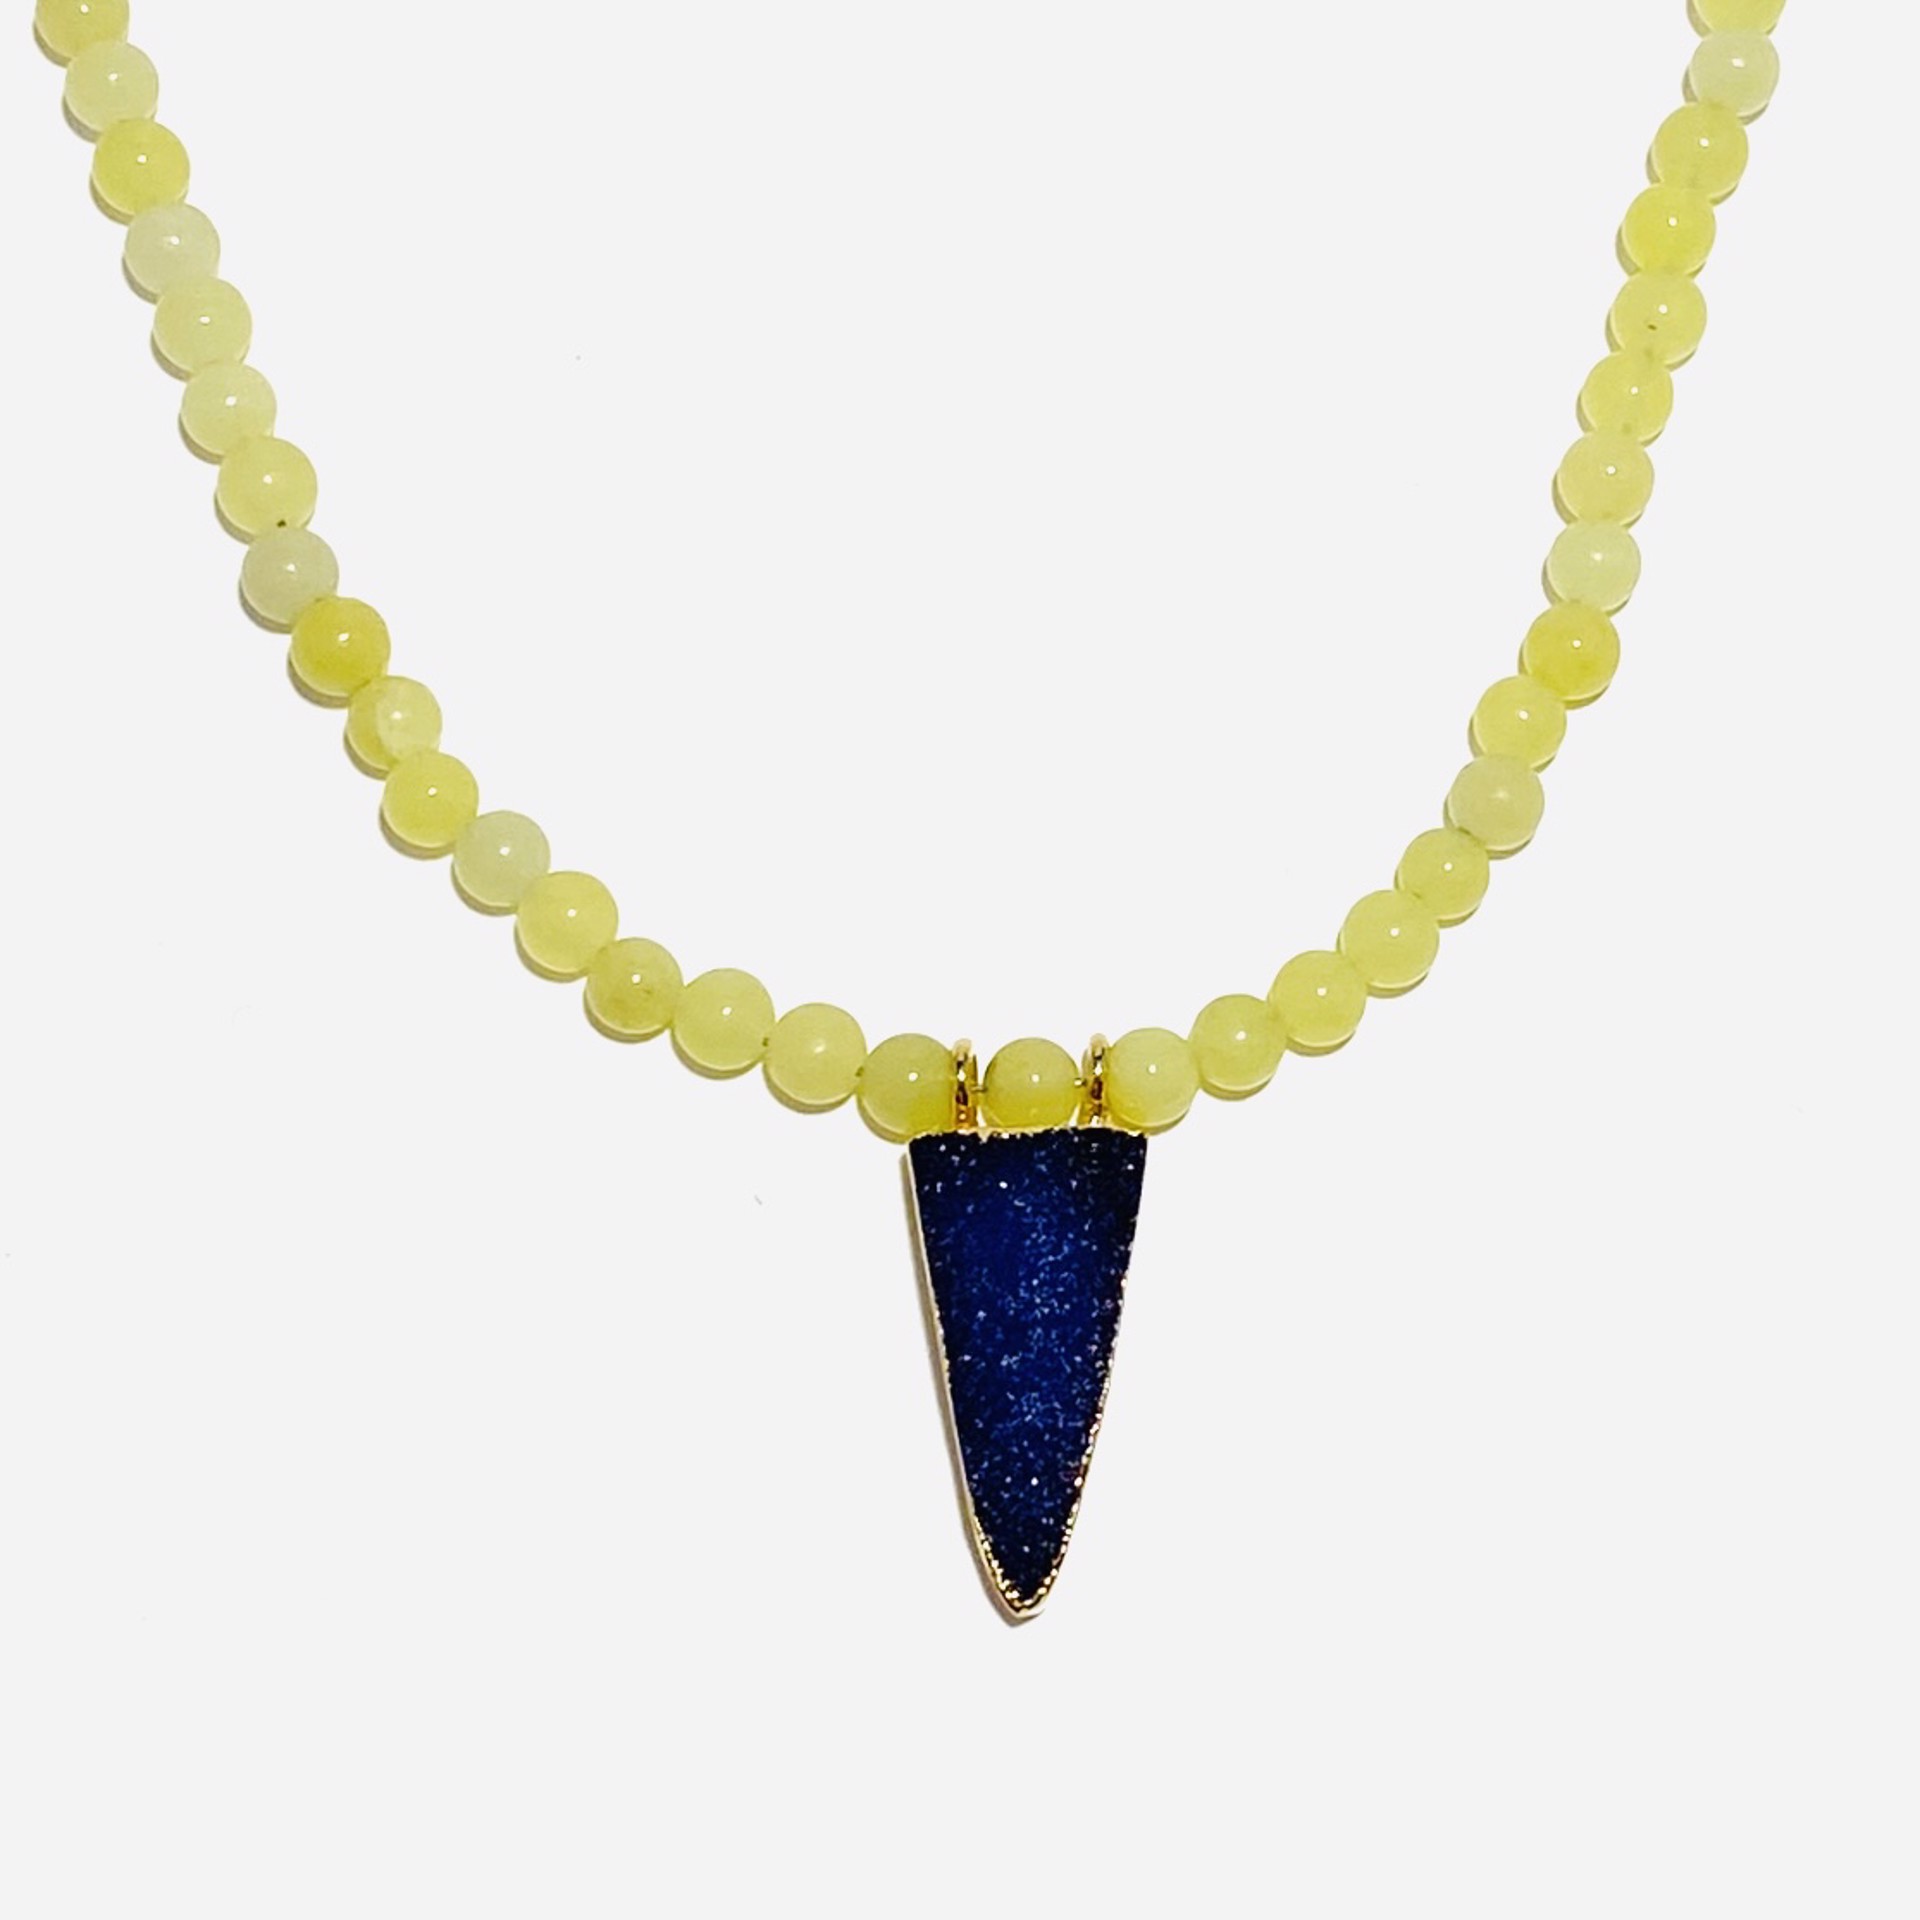 Olive Jade Triangle Navy Blue Druzy Focal Necklace by Nance Trueworthy